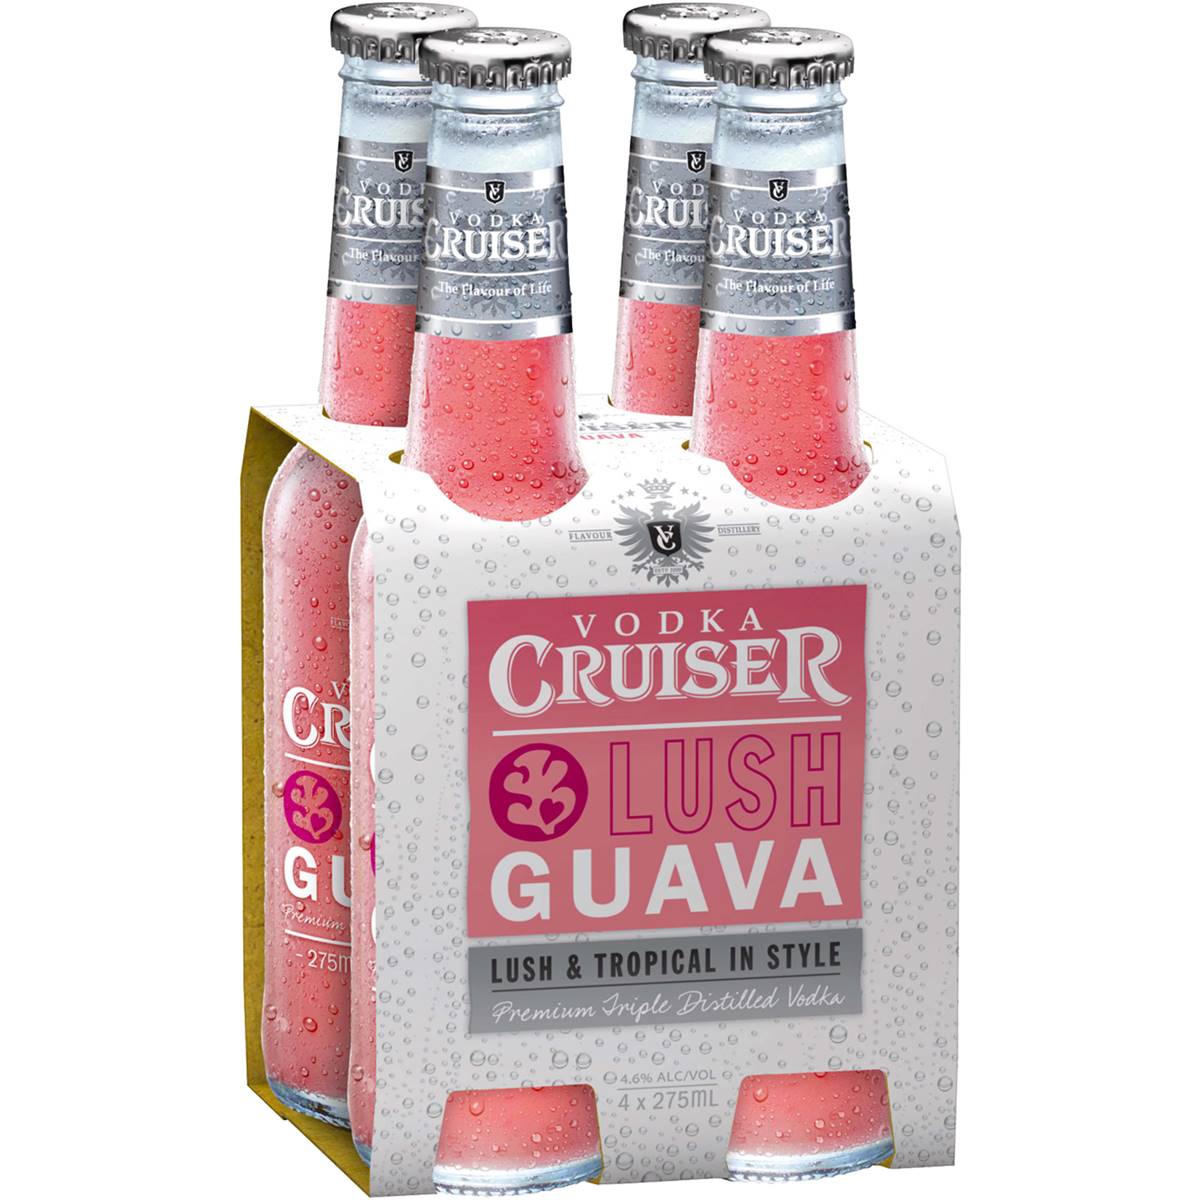 Calories in Vodka Cruiser Lush Guava